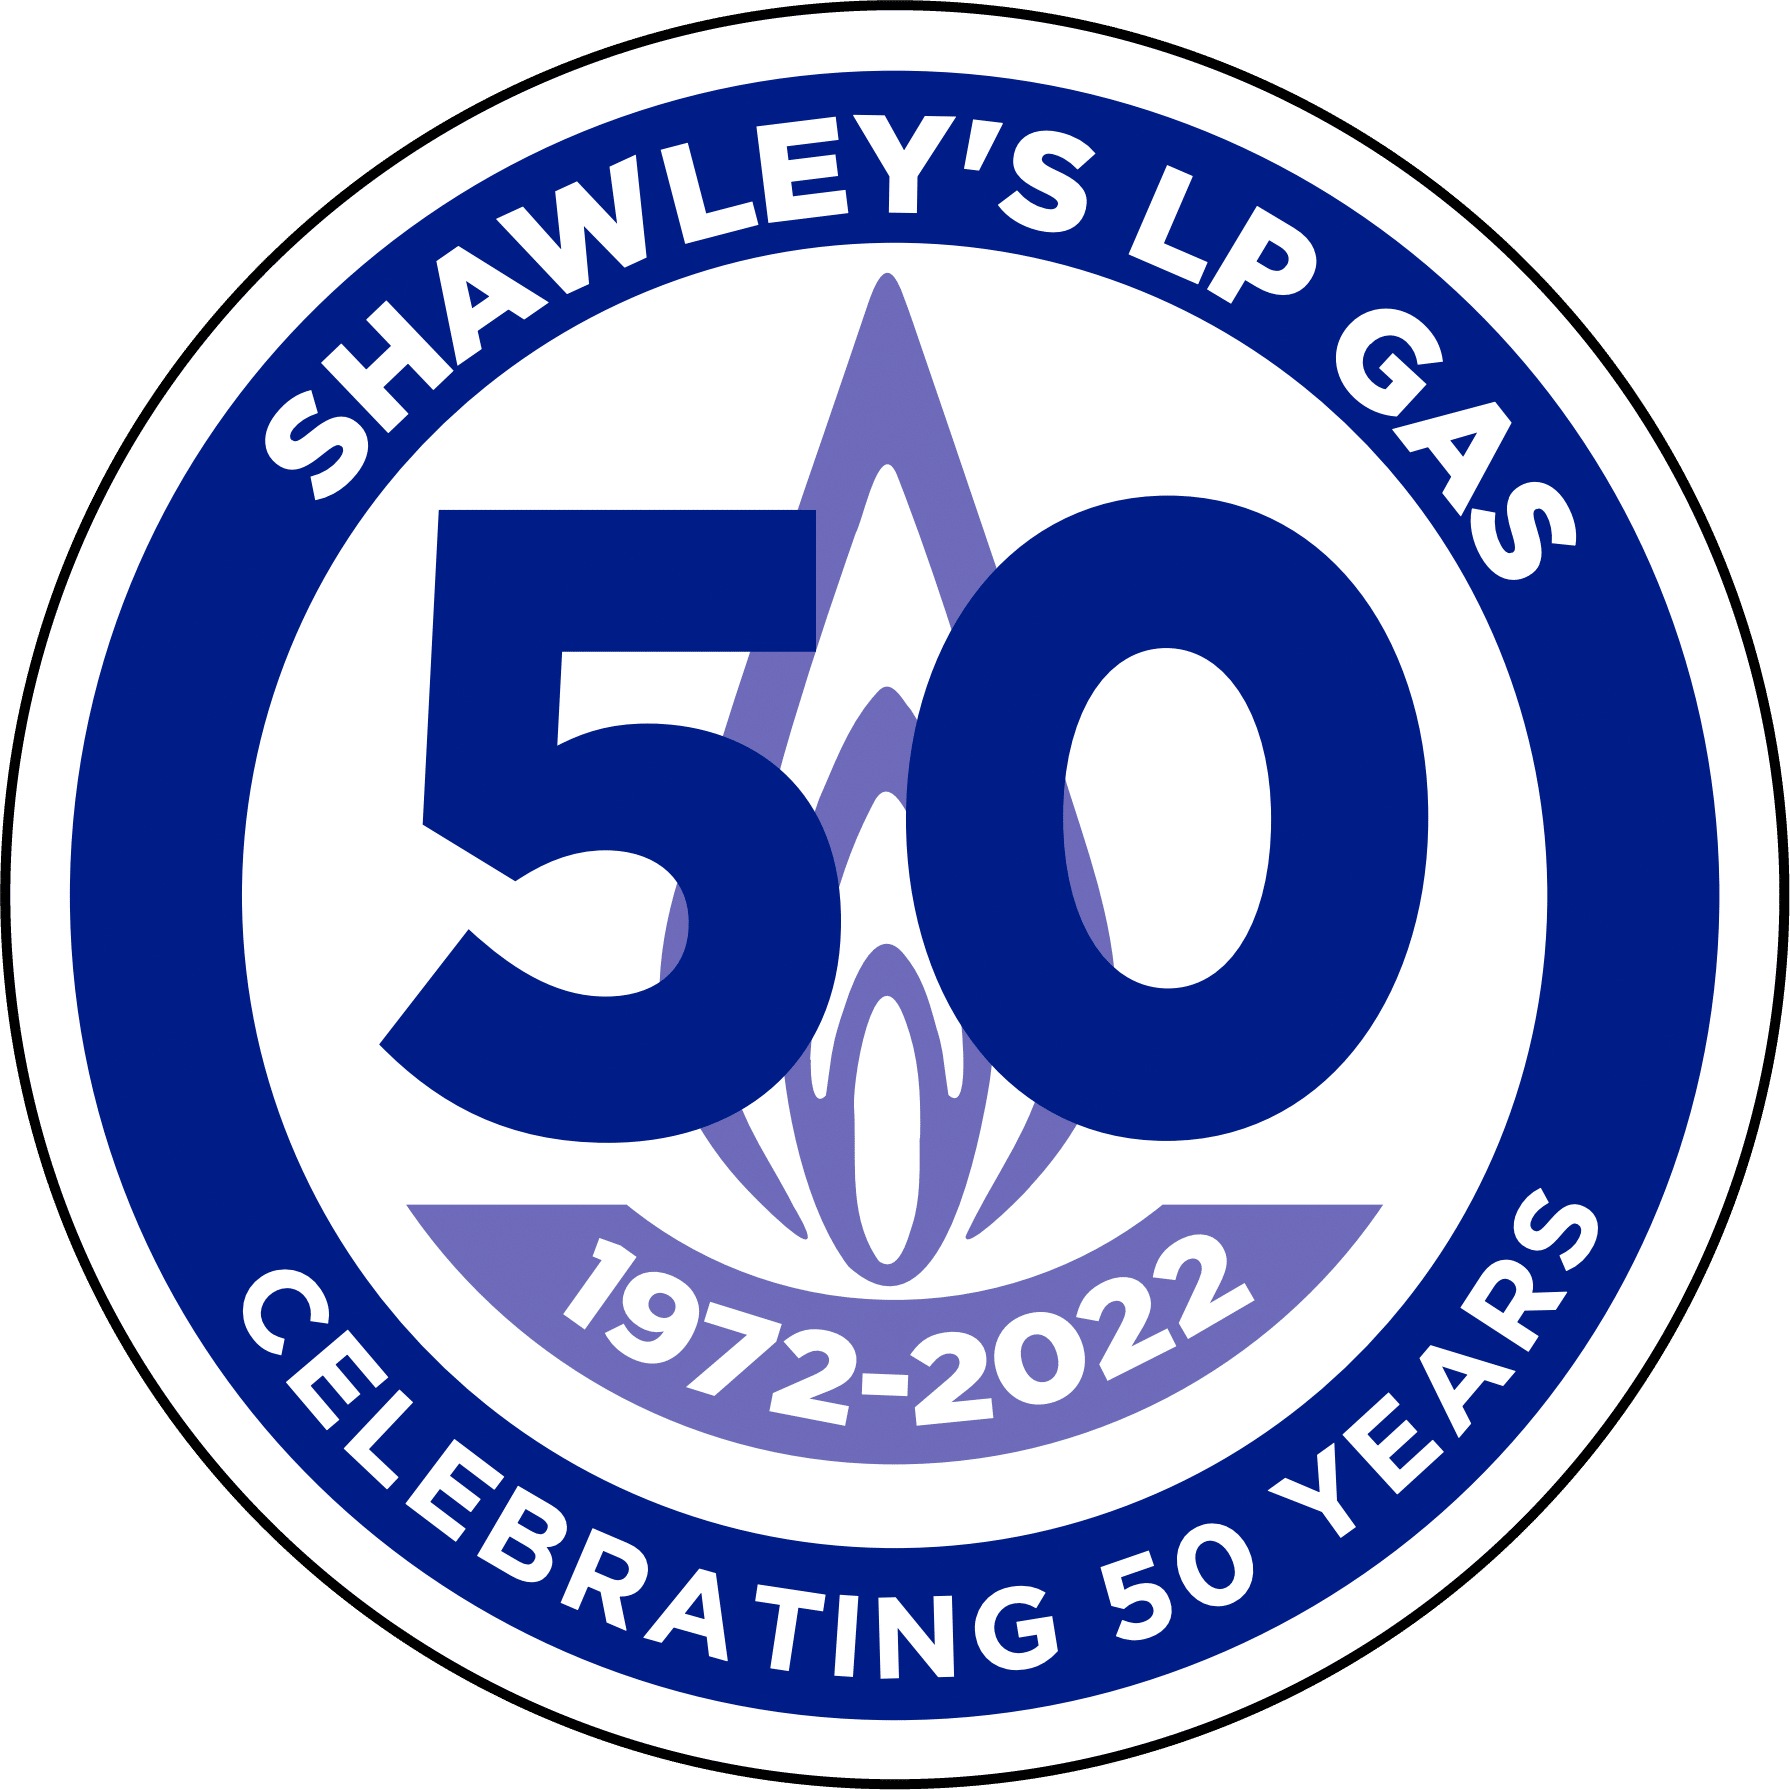 Shawley's 50 year celebration logo